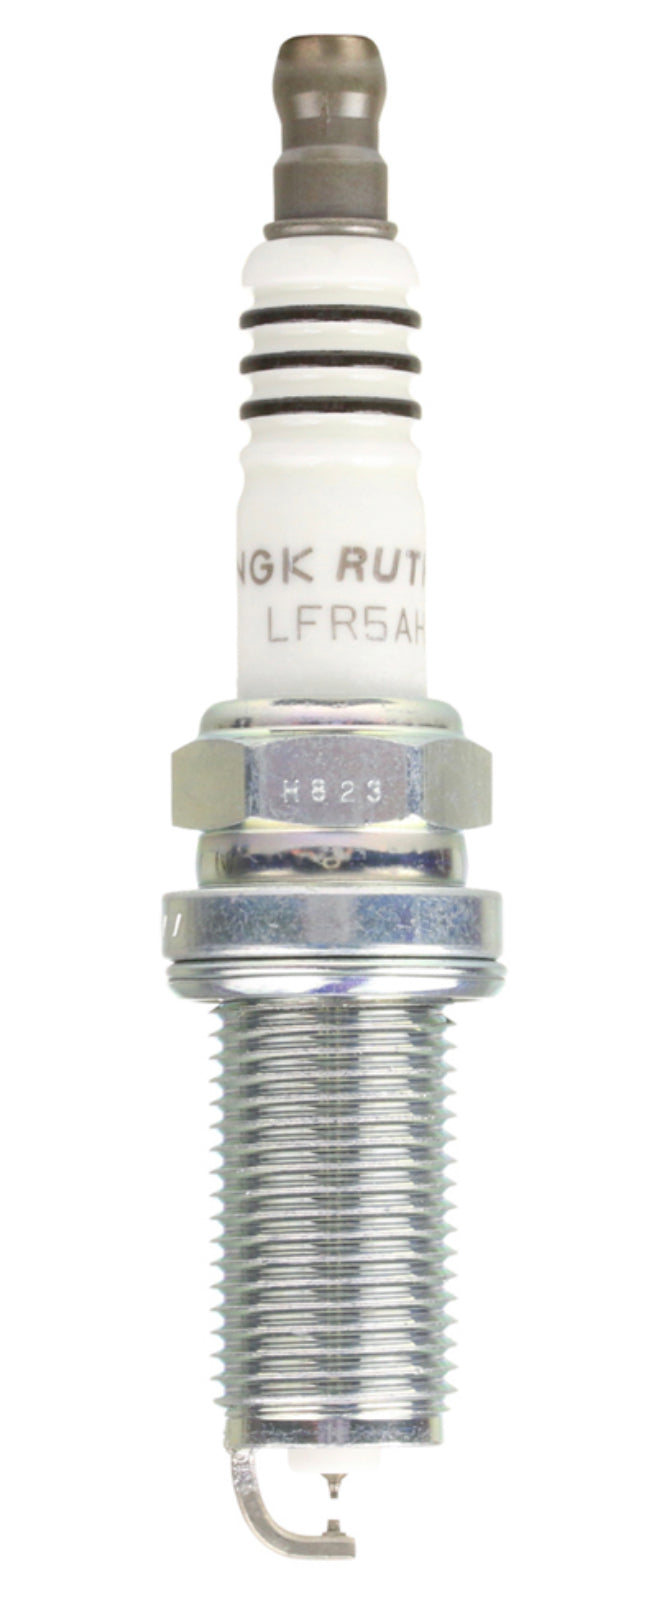 NGK VQDE Ruthenium Spark Plug (Select Heat Range)